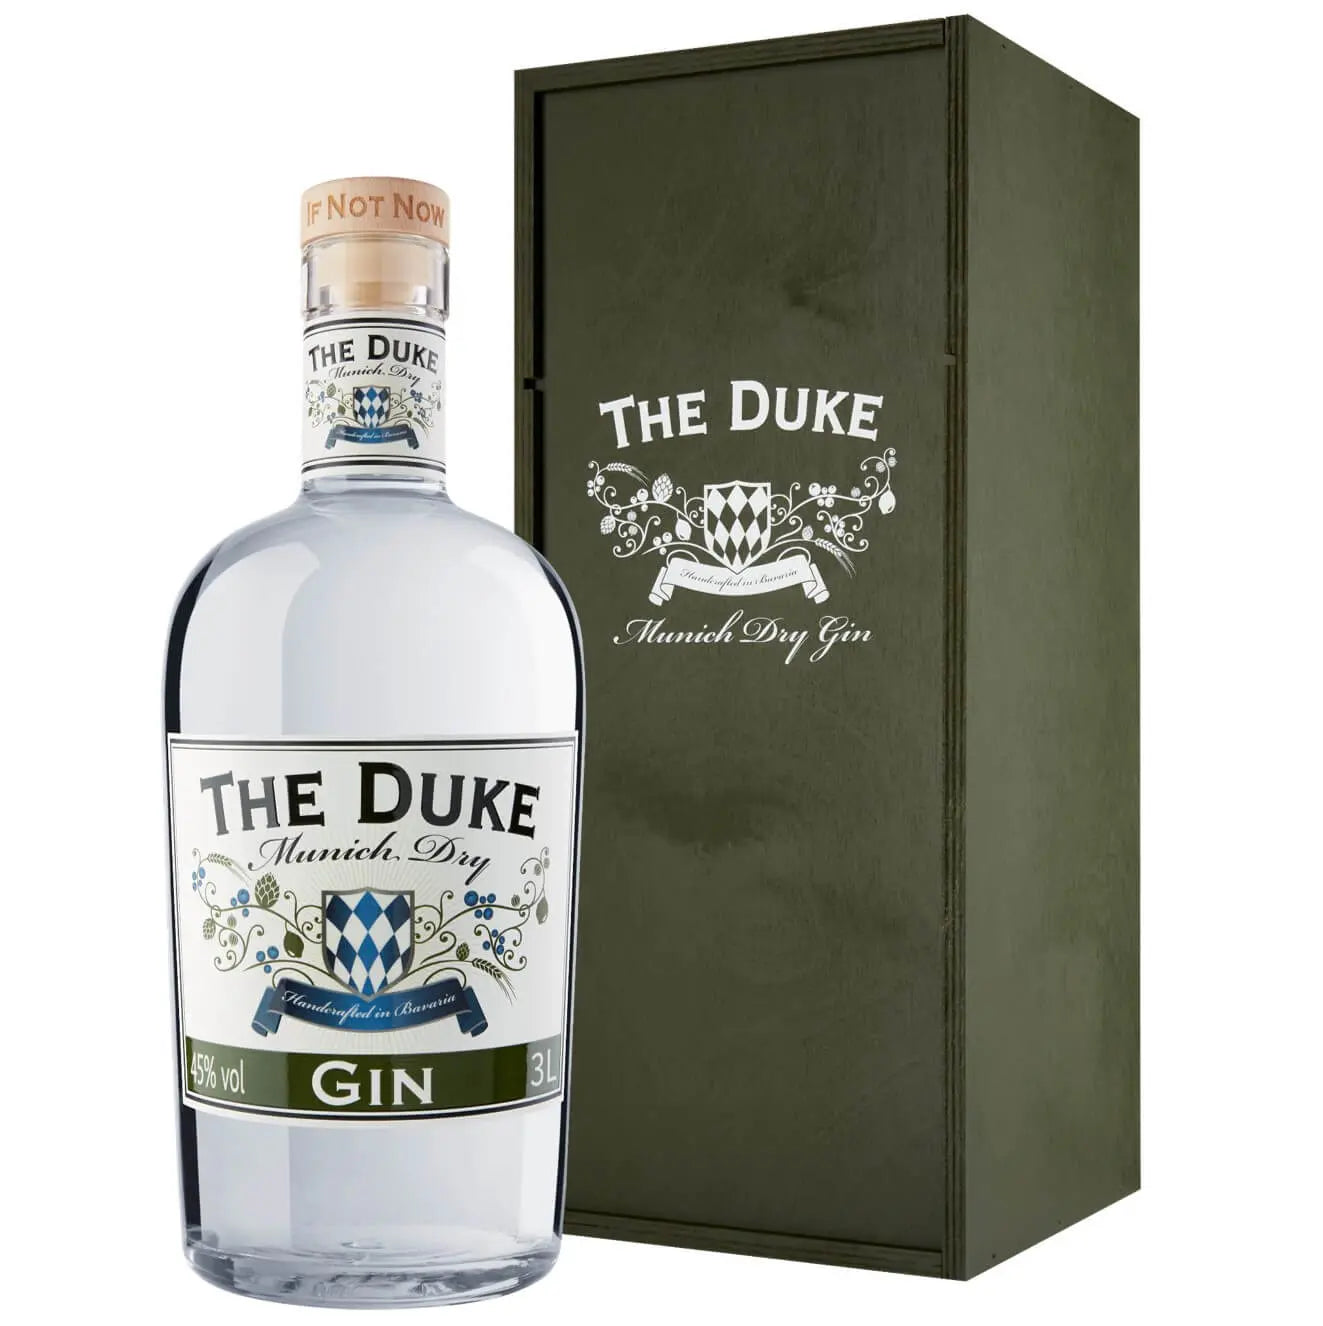 THE DUKE - Munich Dry Gin (3 liters) | Gin